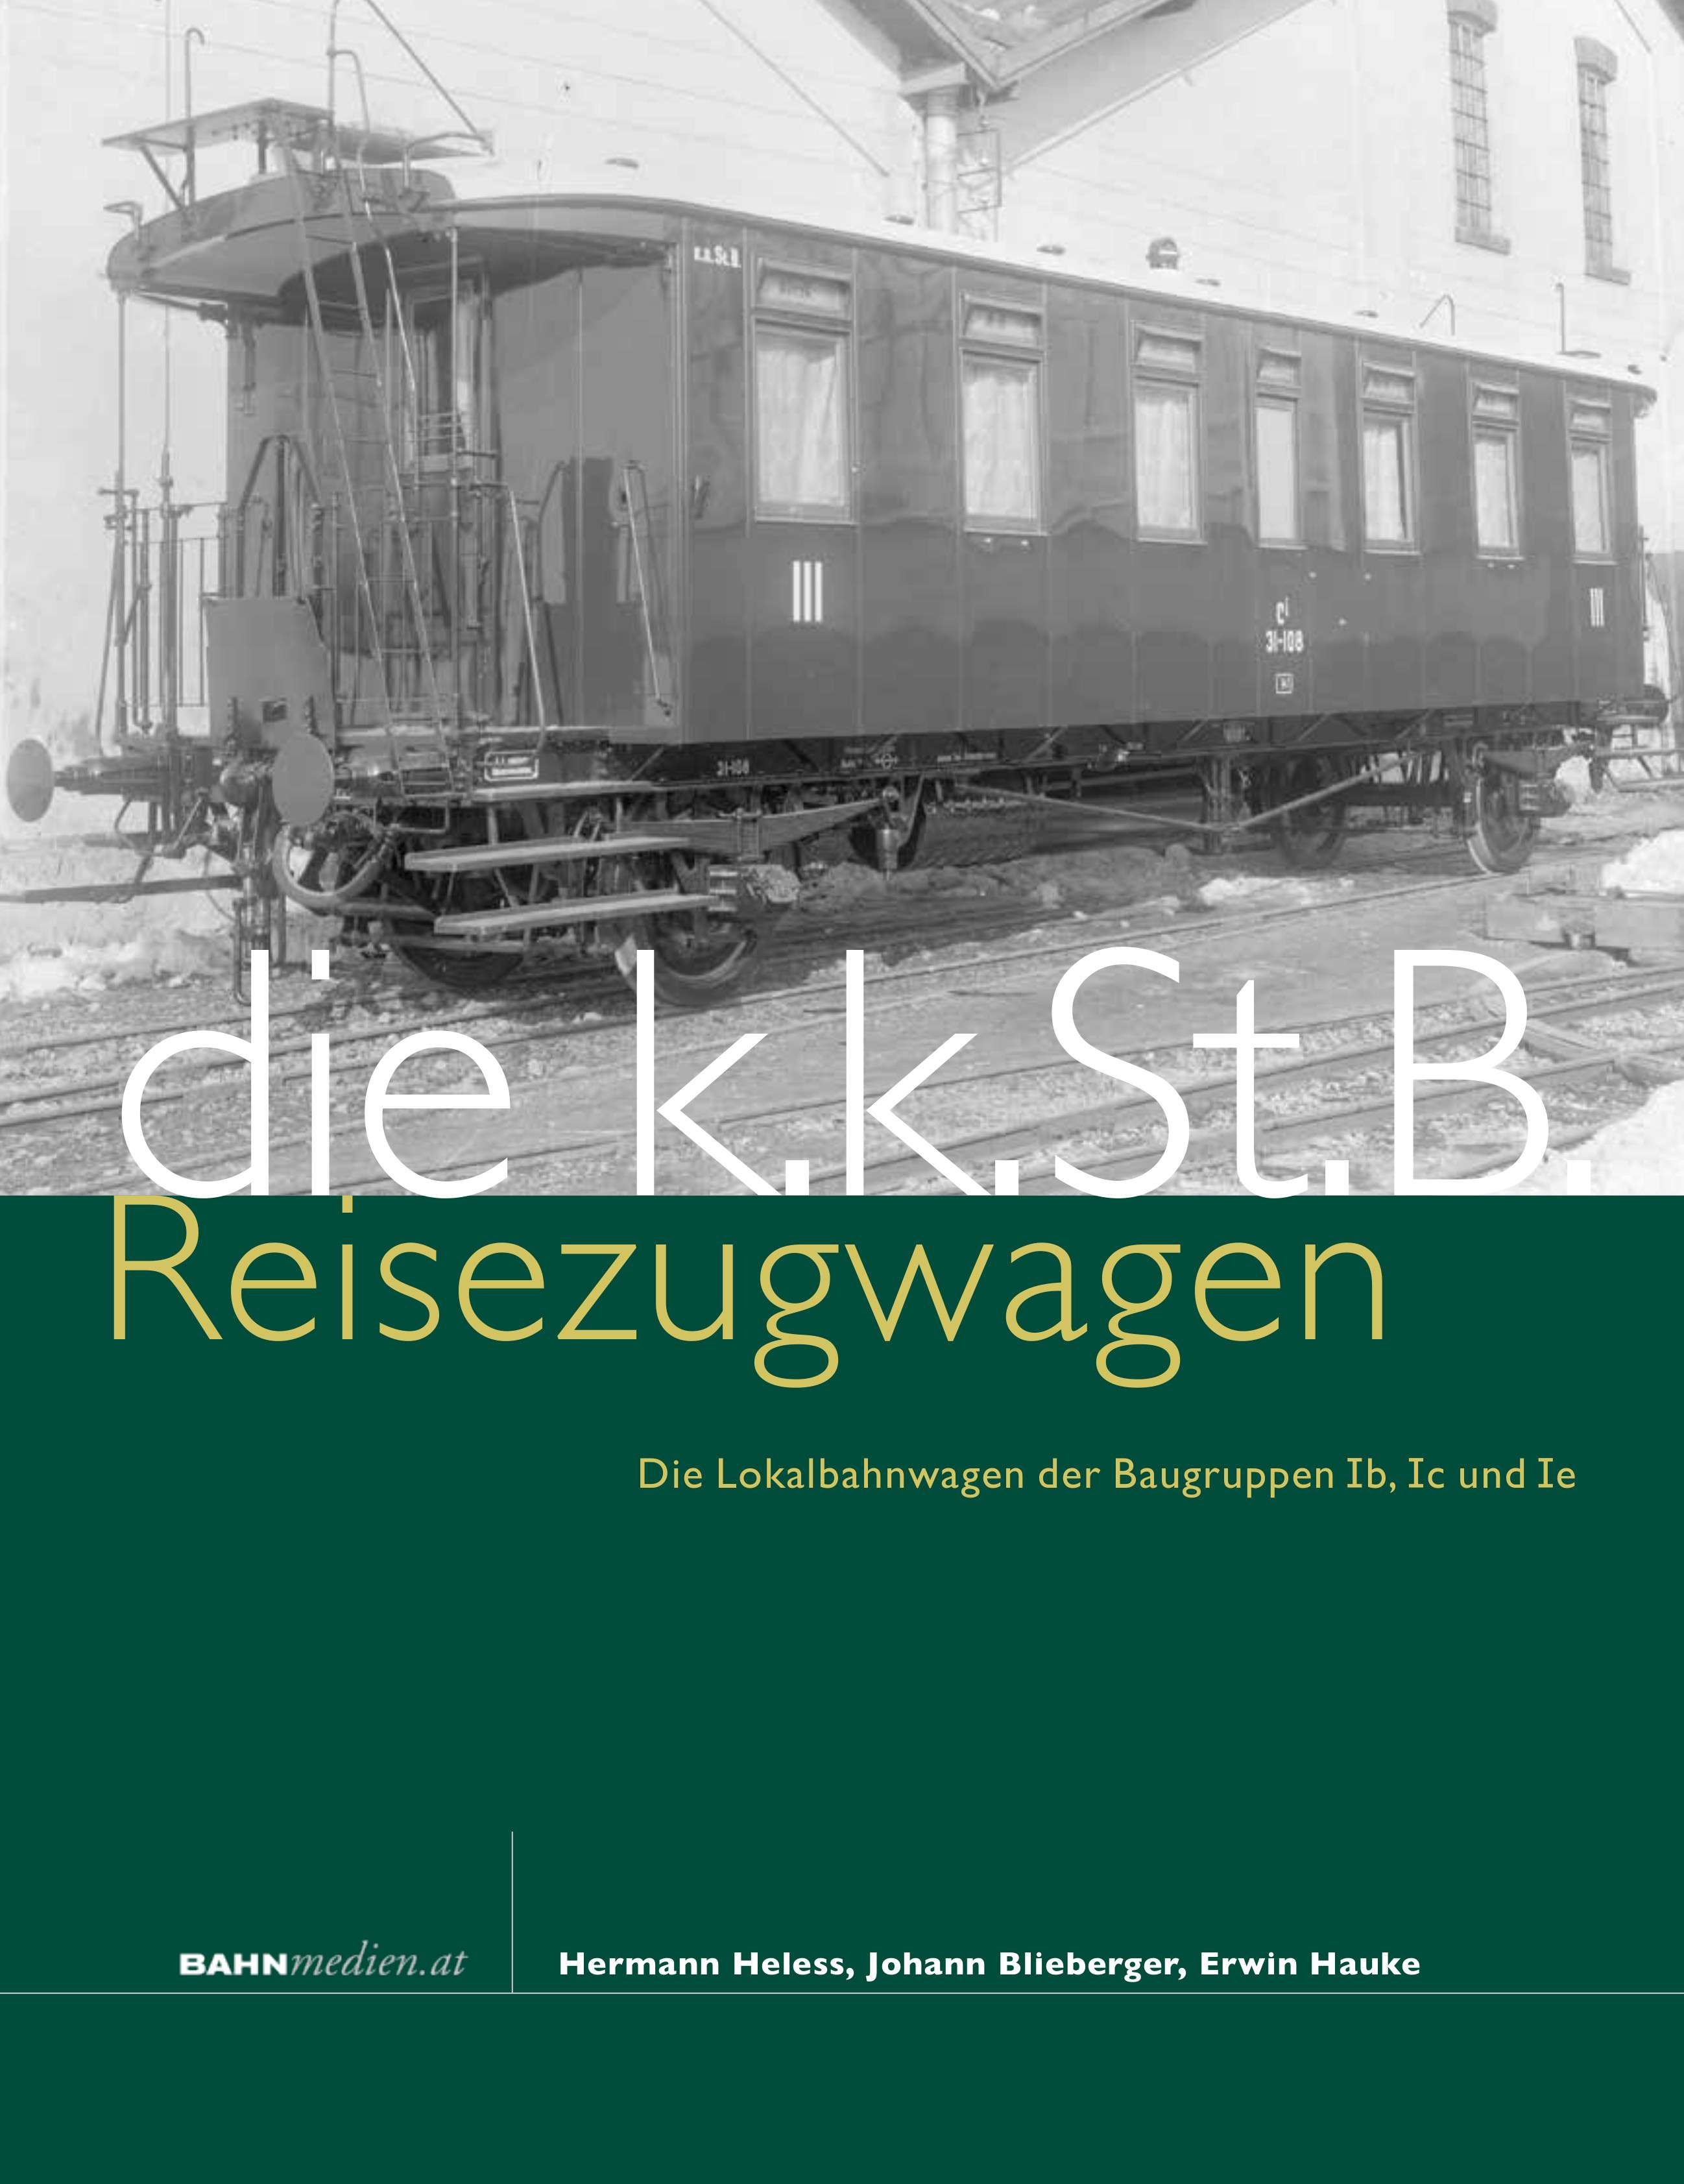 kkWIB2 - Cover